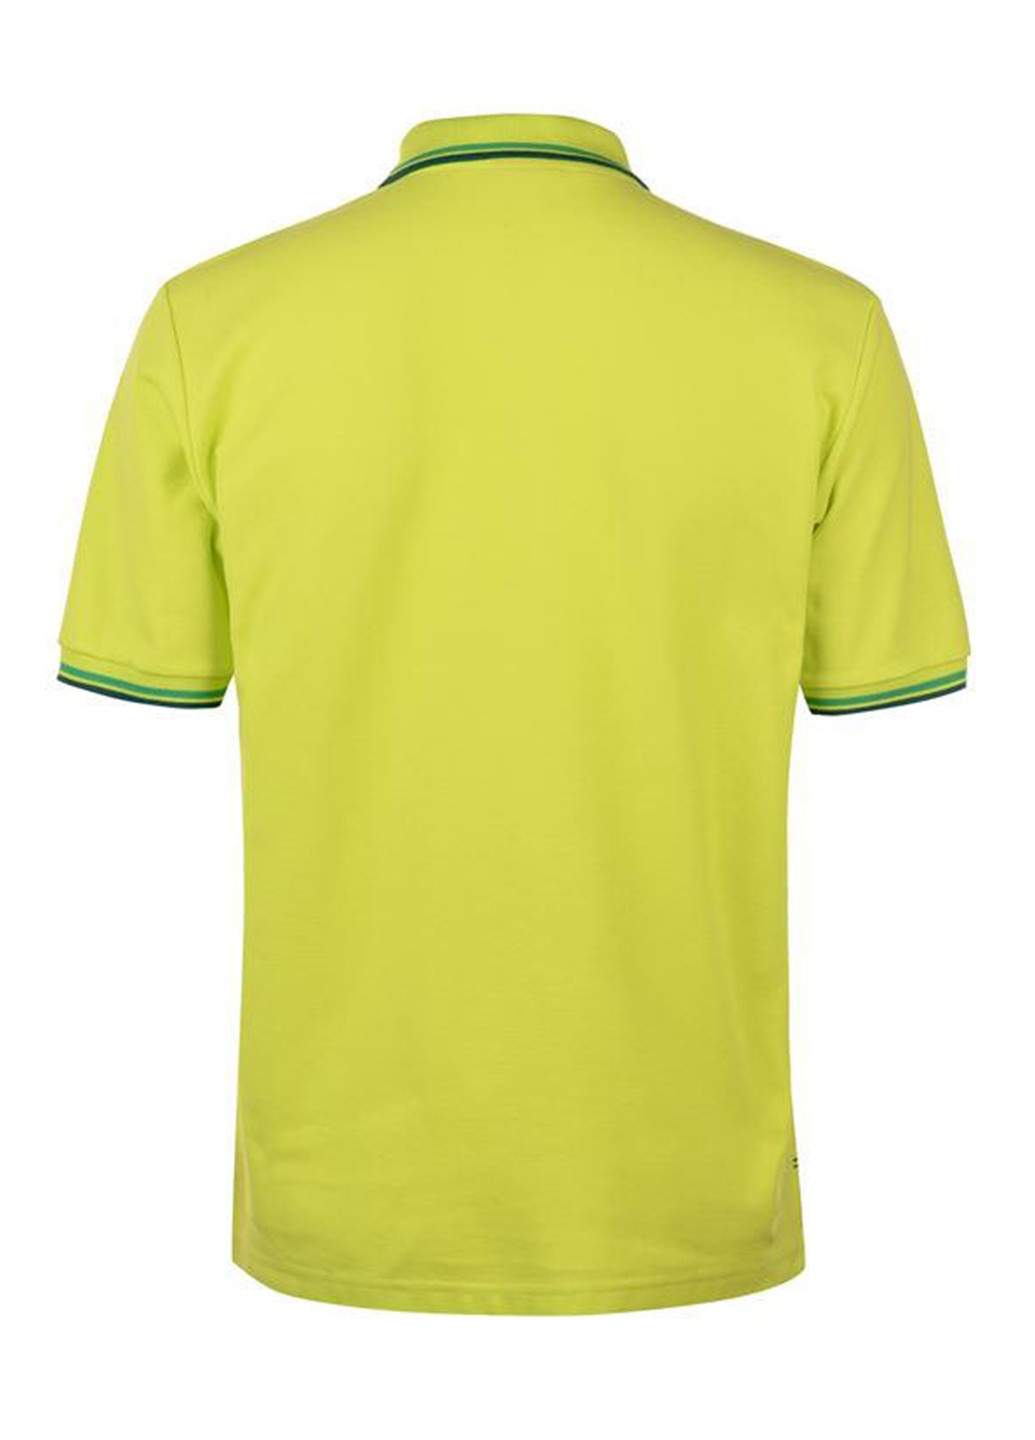 Лайм футболка-поло для мужчин Slazenger с логотипом